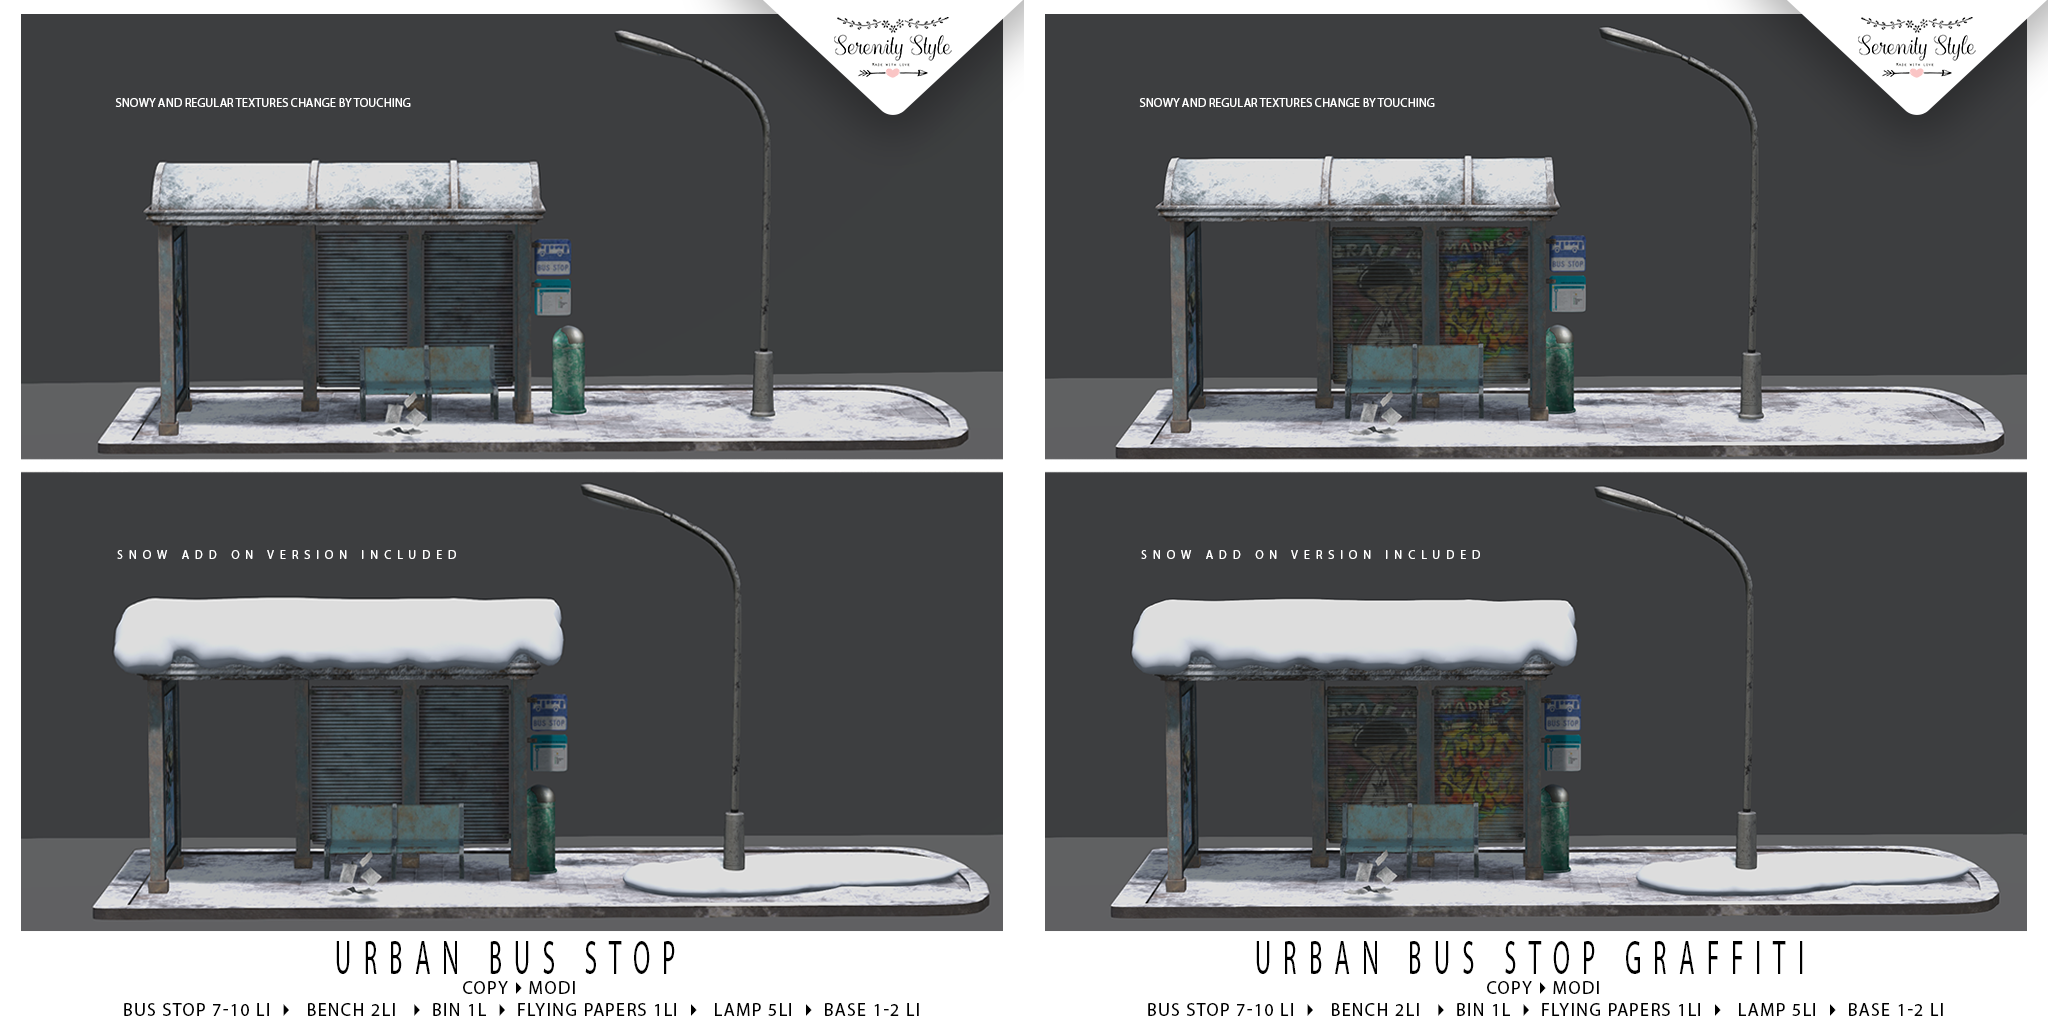 Serenity Style – Urban Bus Stop Snow Edition